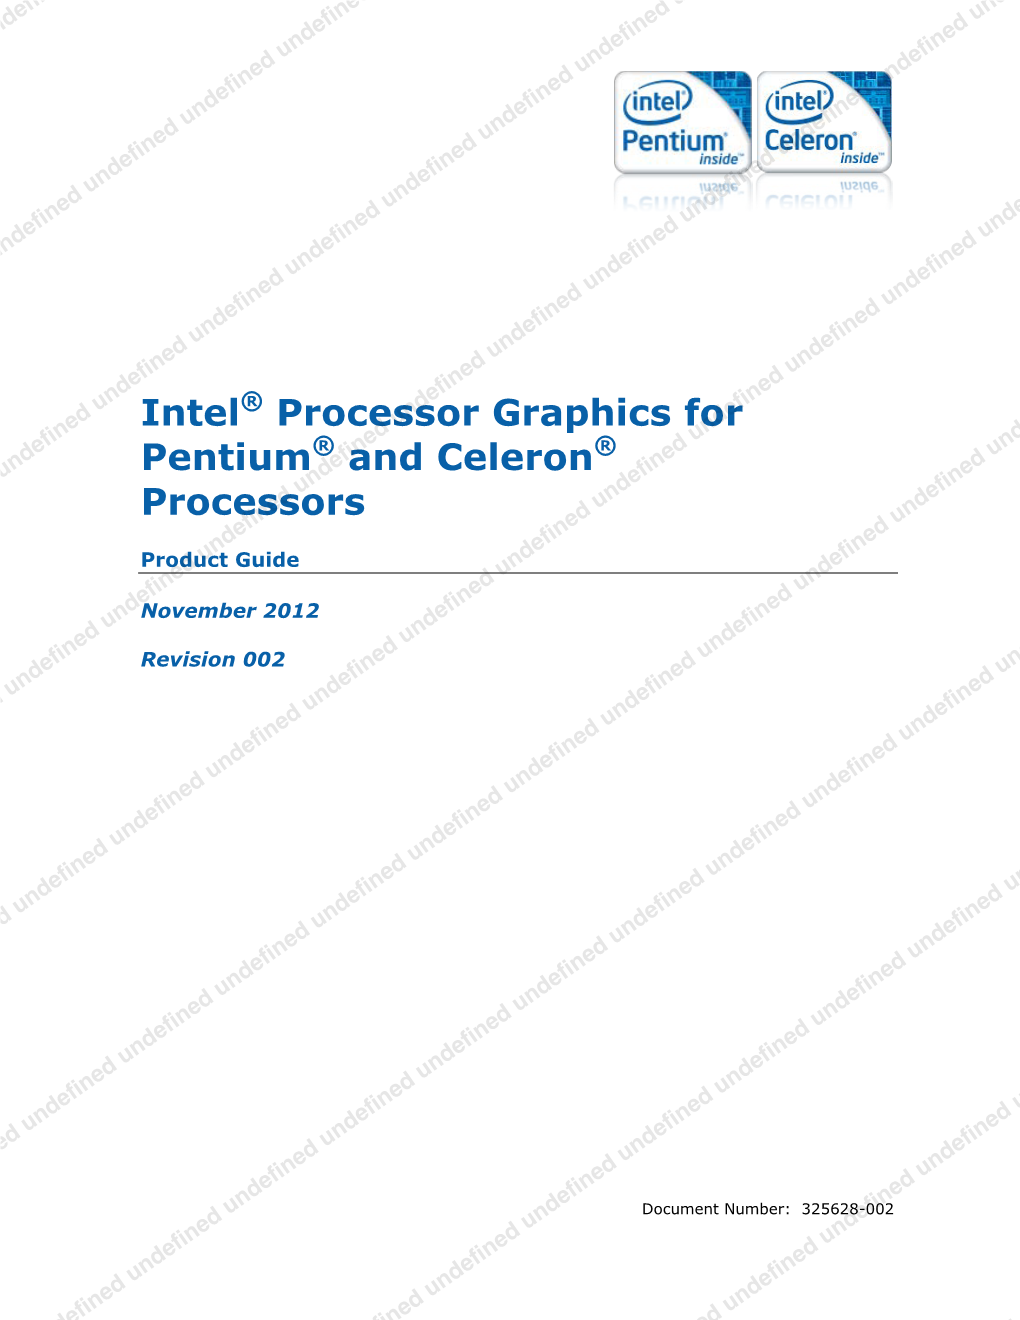 Intel® Processor Graphics for Pentium® and Celeron® Processors